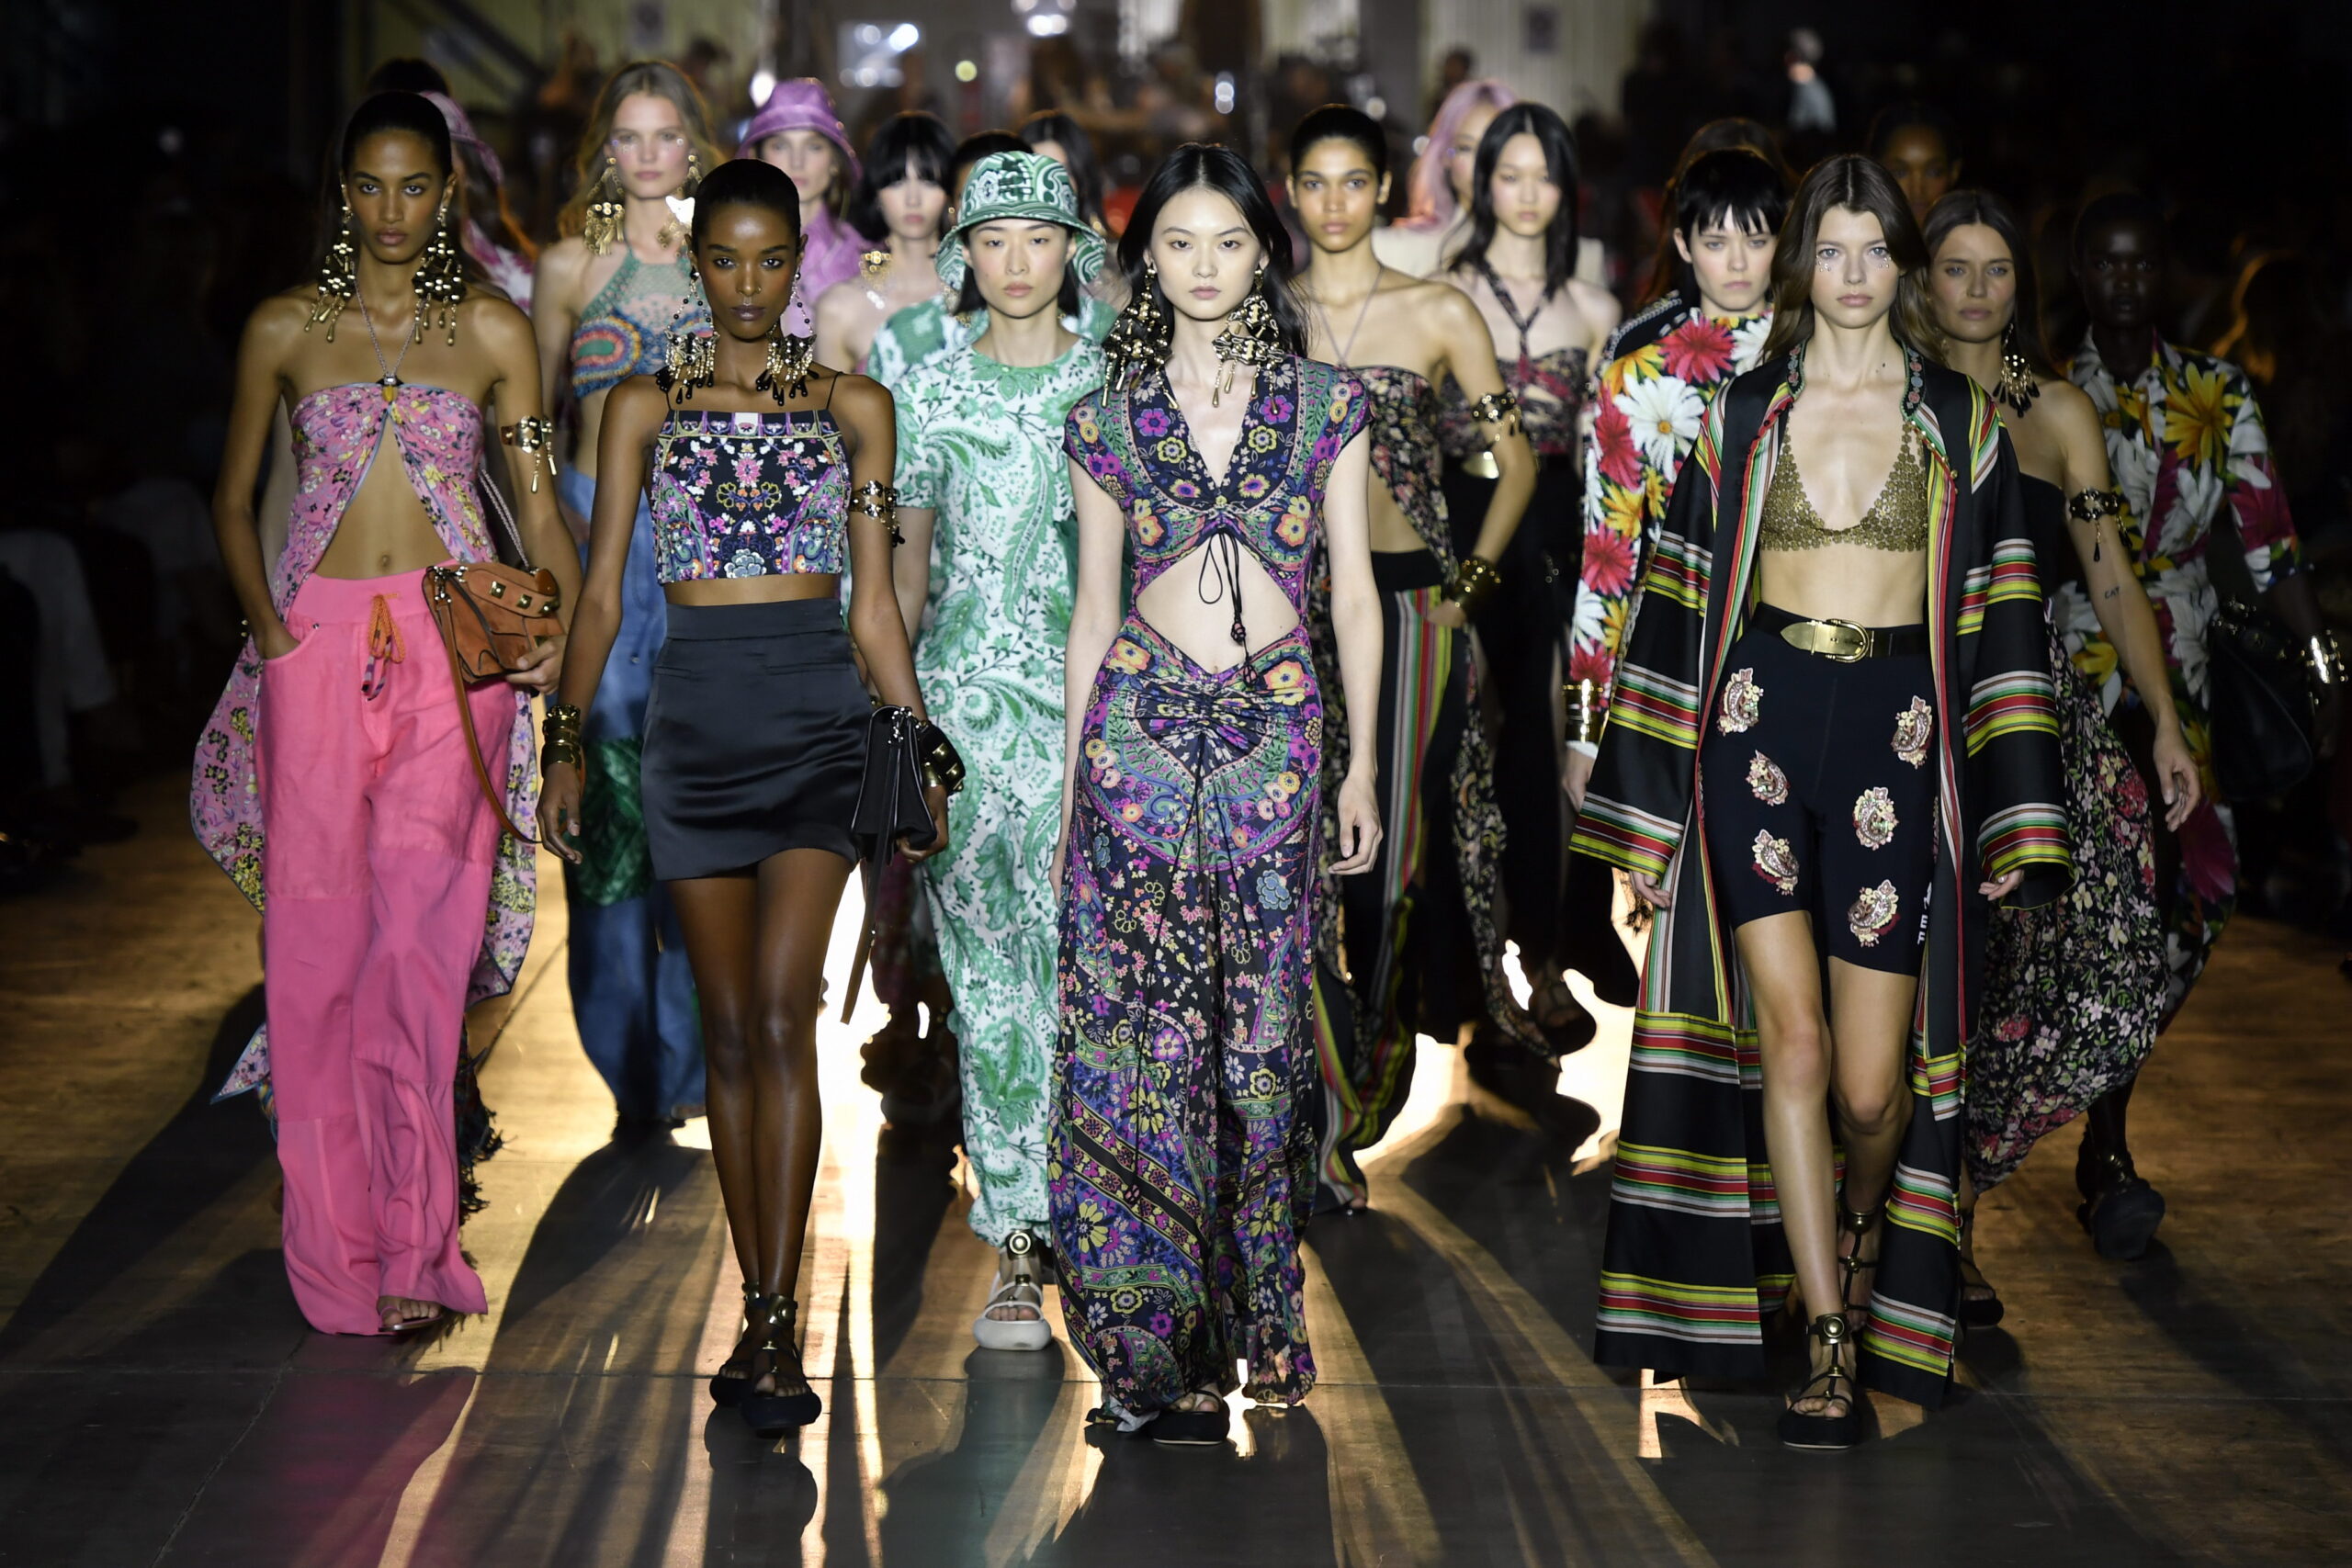 Boho Fashion: Why This Free-Spirited Trend Keeps Coming Back